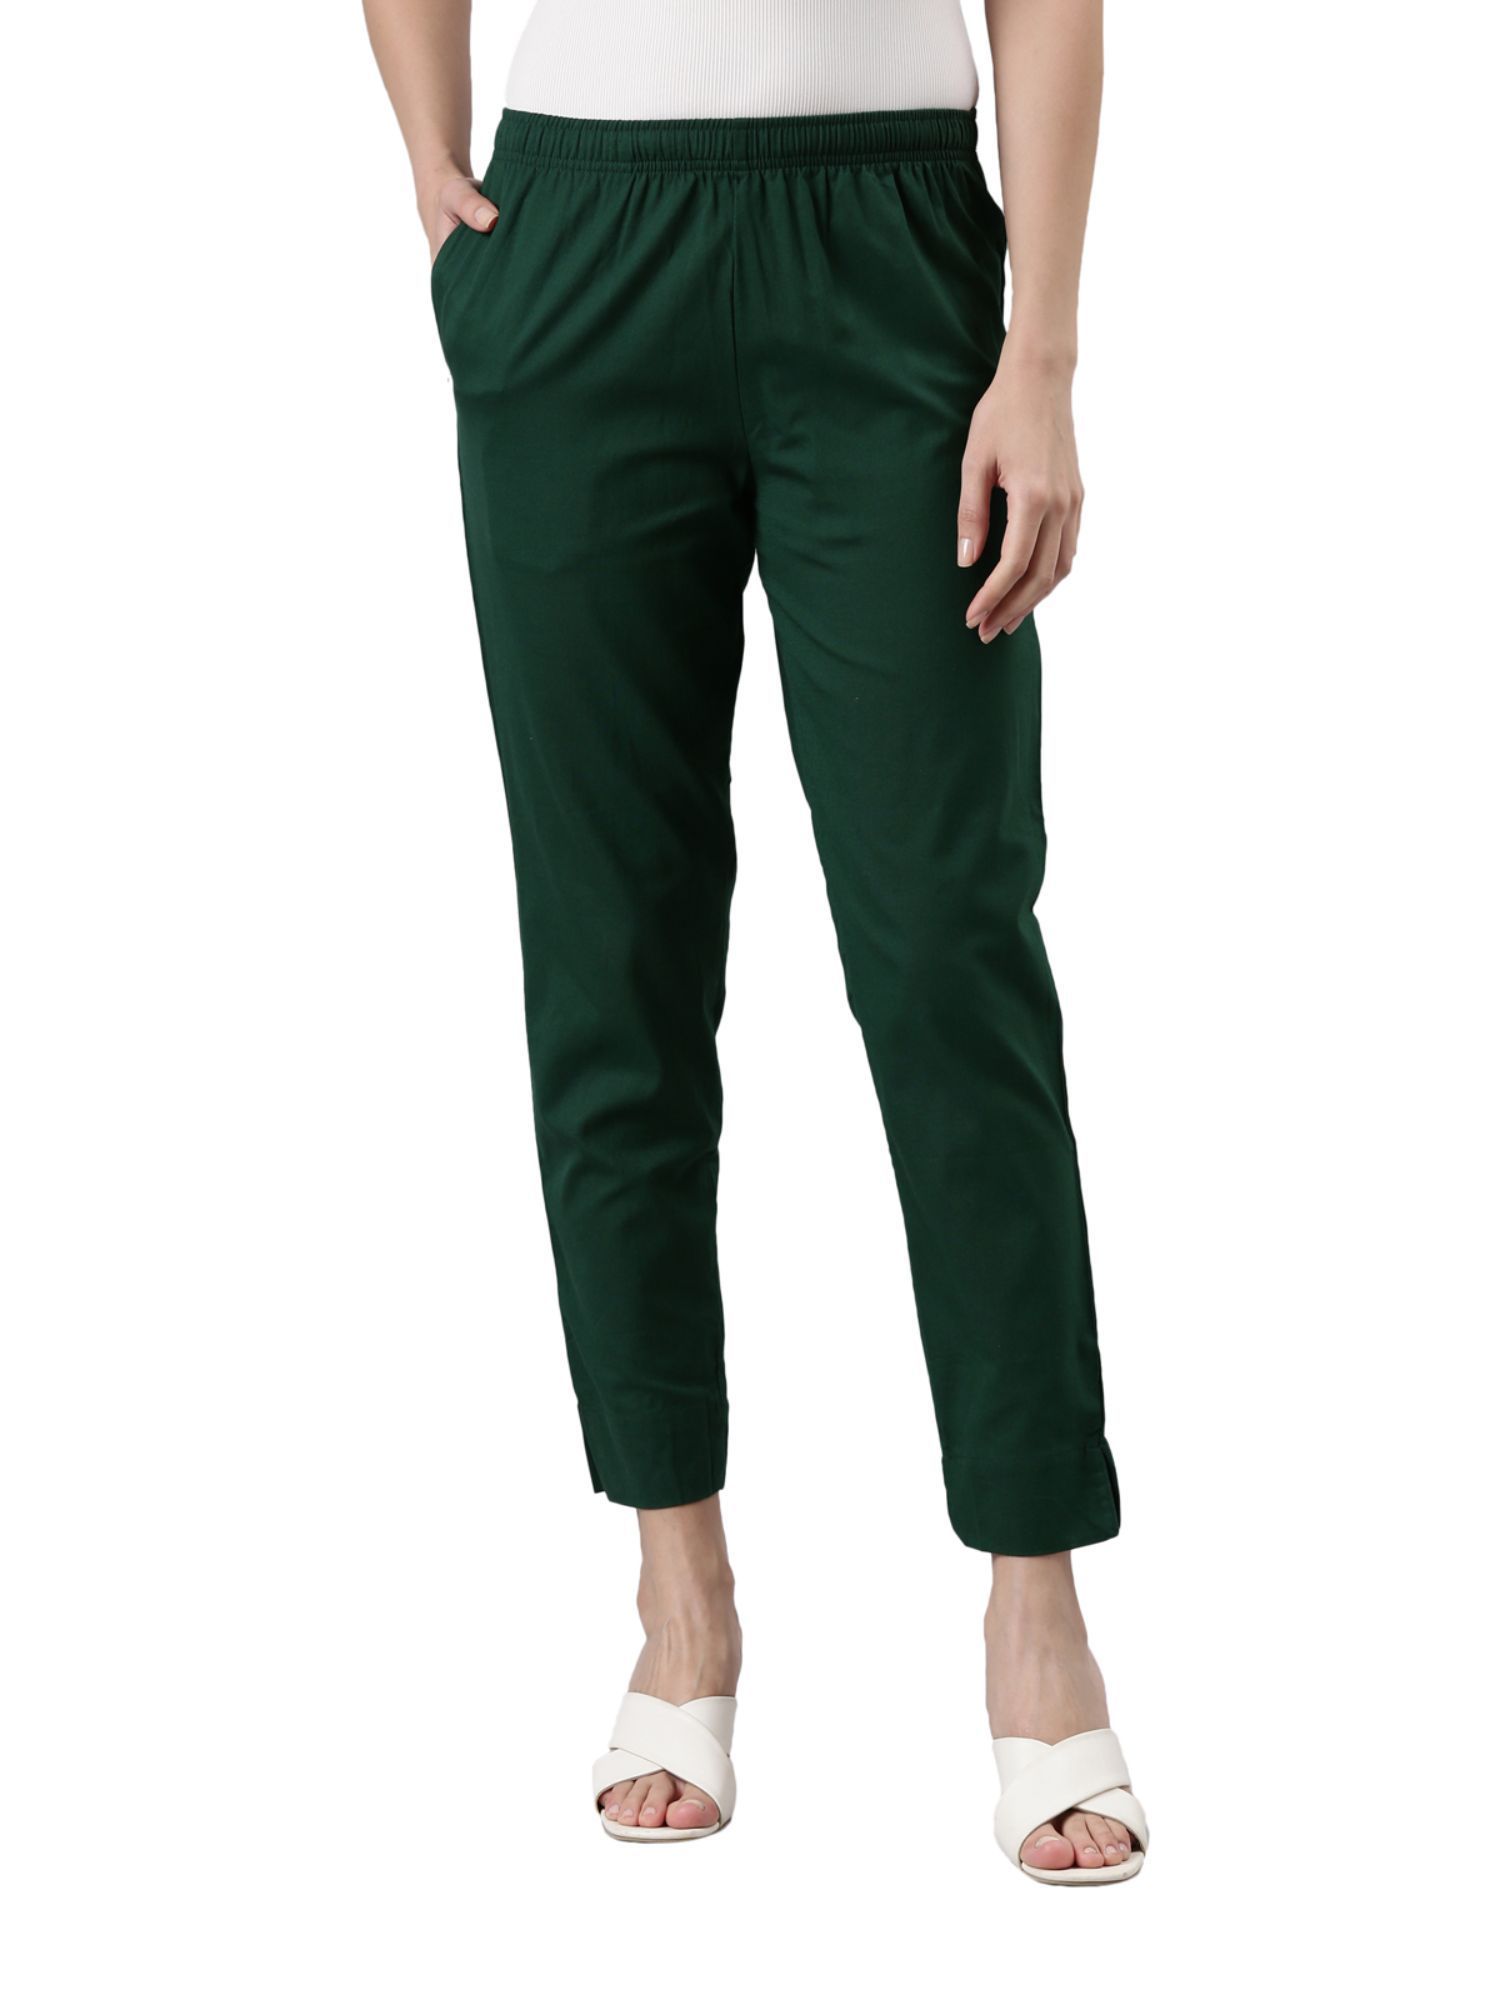 Buy Rzlecort Womens Regular Straight Fit Multicolour Pant L at Amazonin